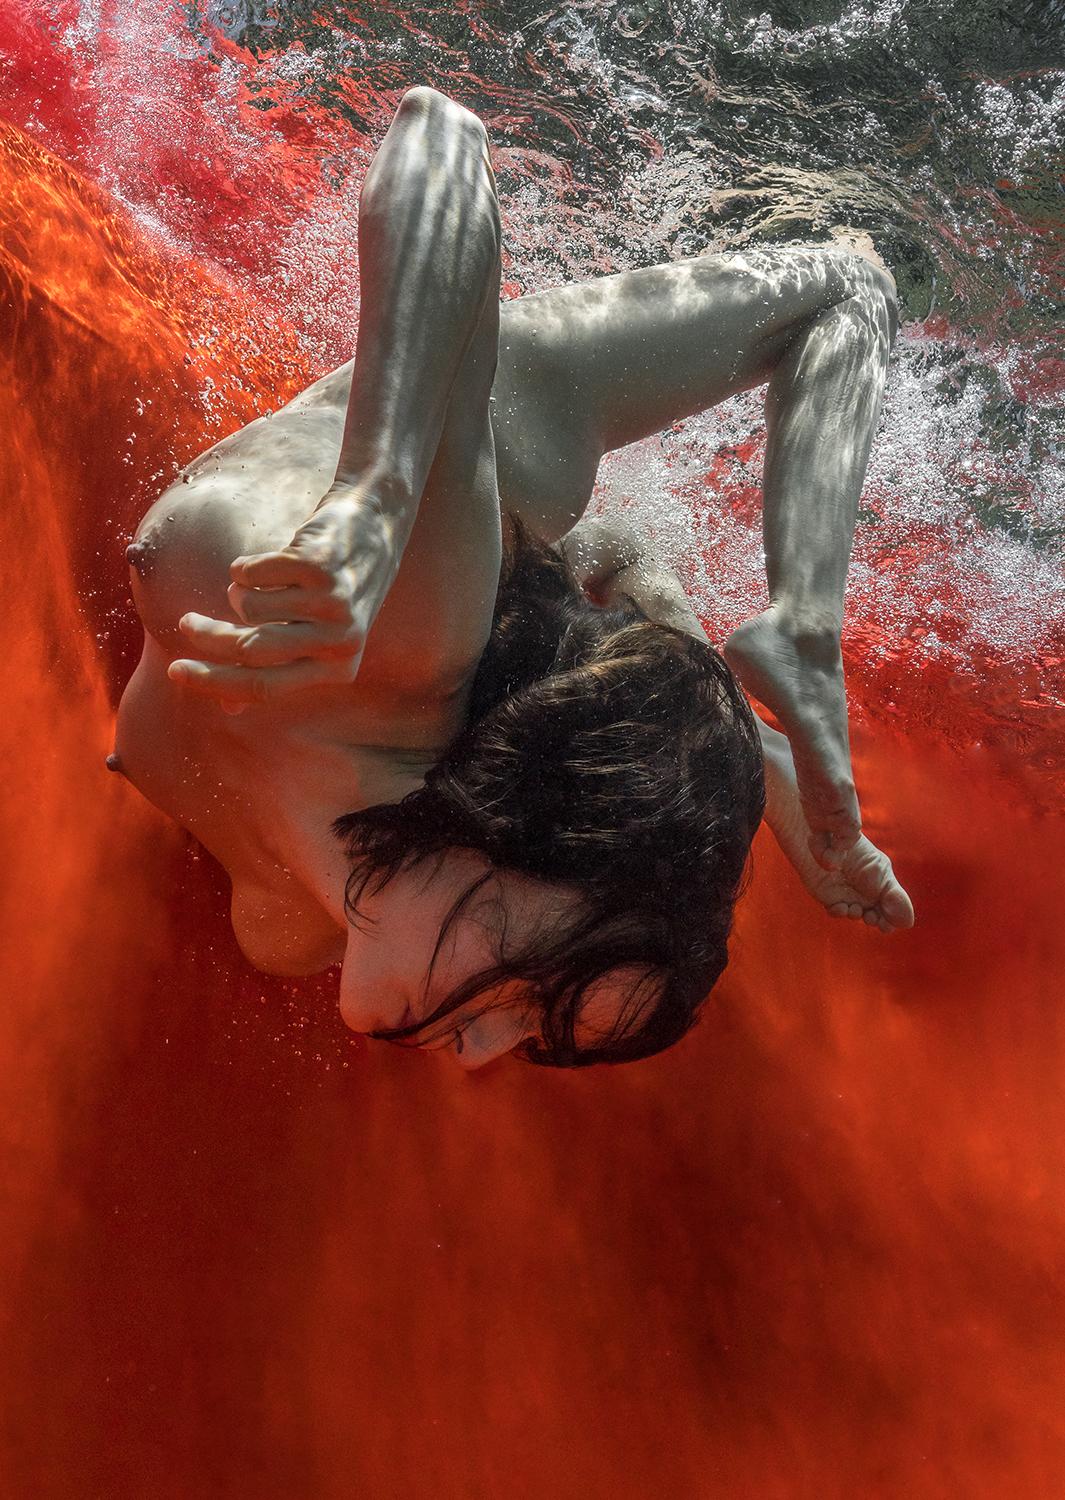 Hot Pretzel - underwater nude photograph - archival pigment print 16